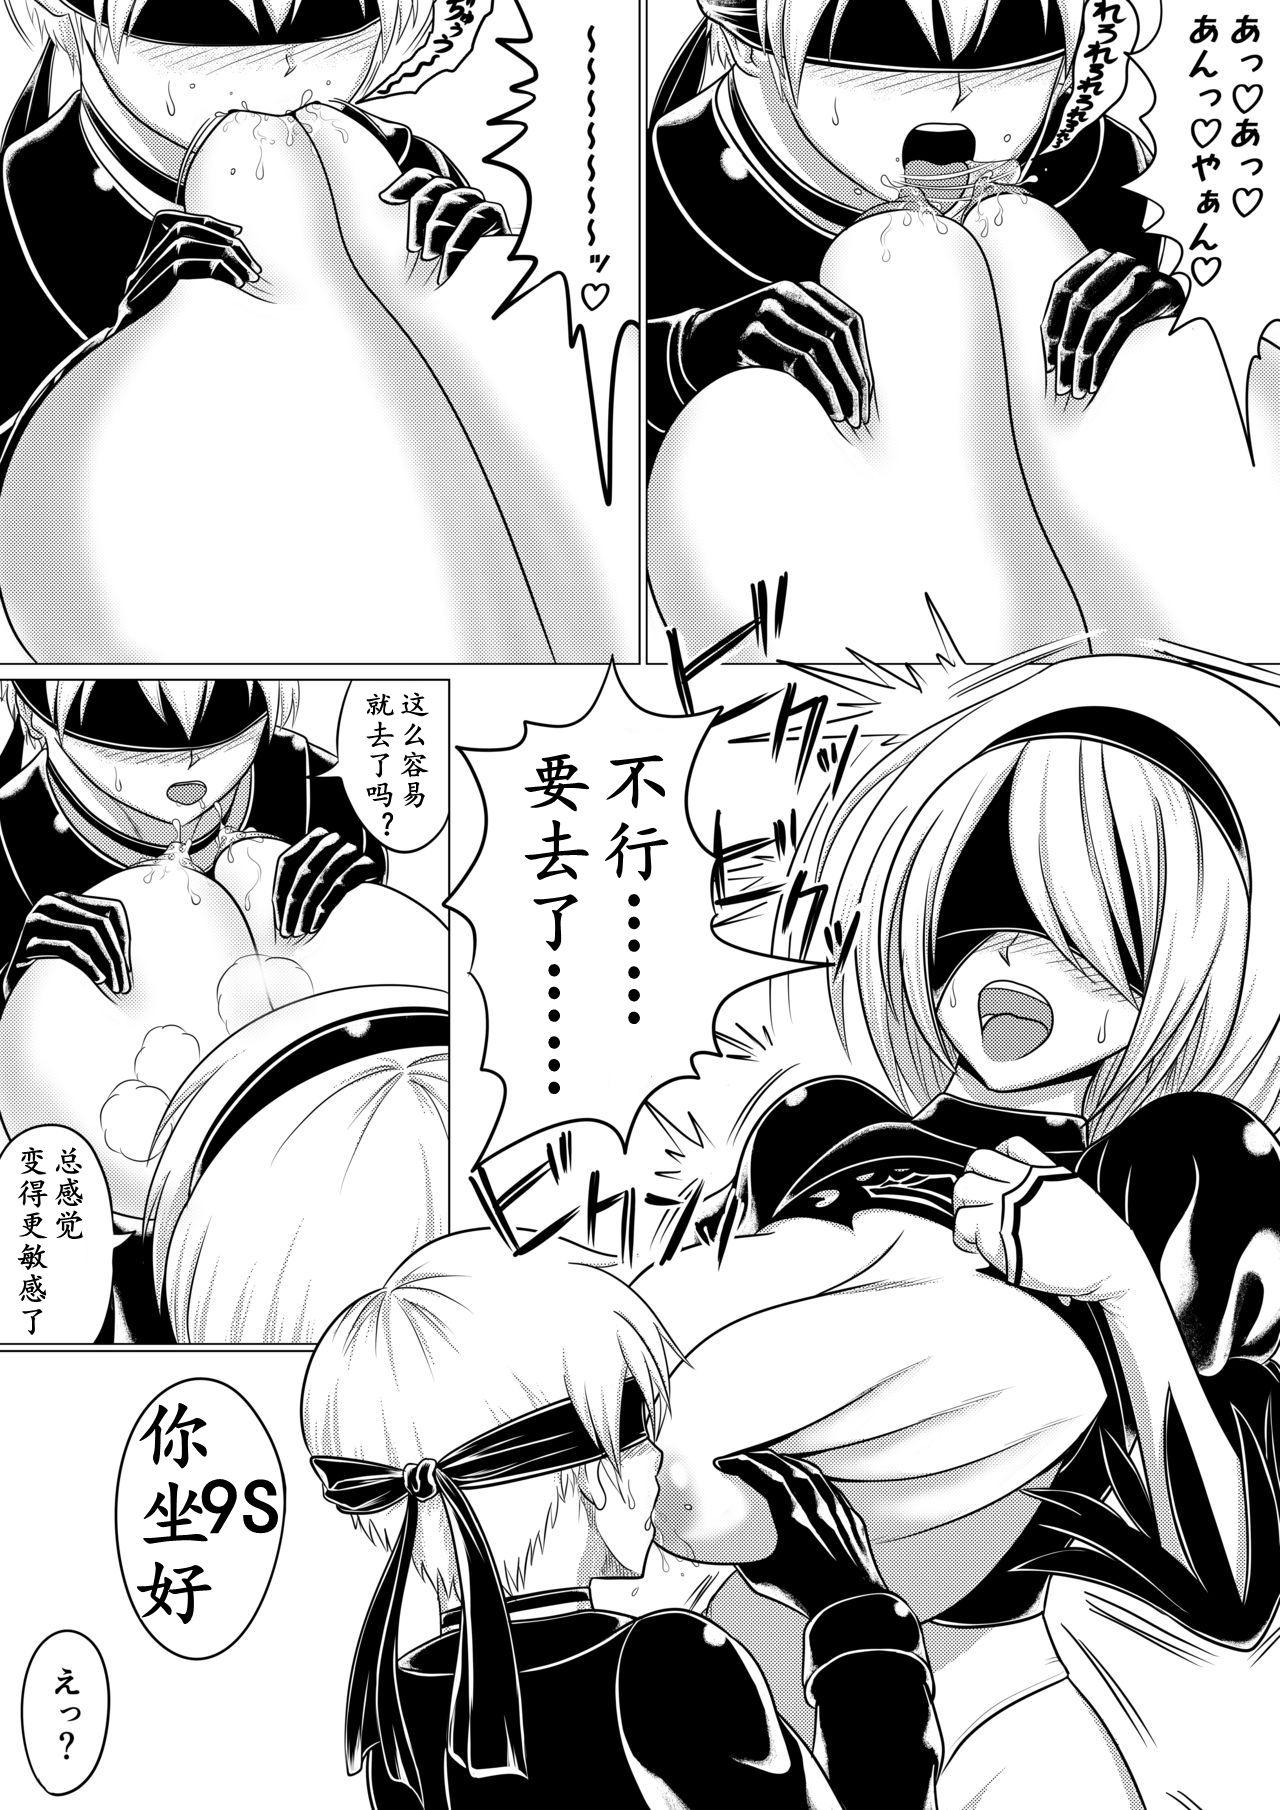 Sucking Dicks Automata Manga Oppai Hen - Nier automata Milfsex - Page 4